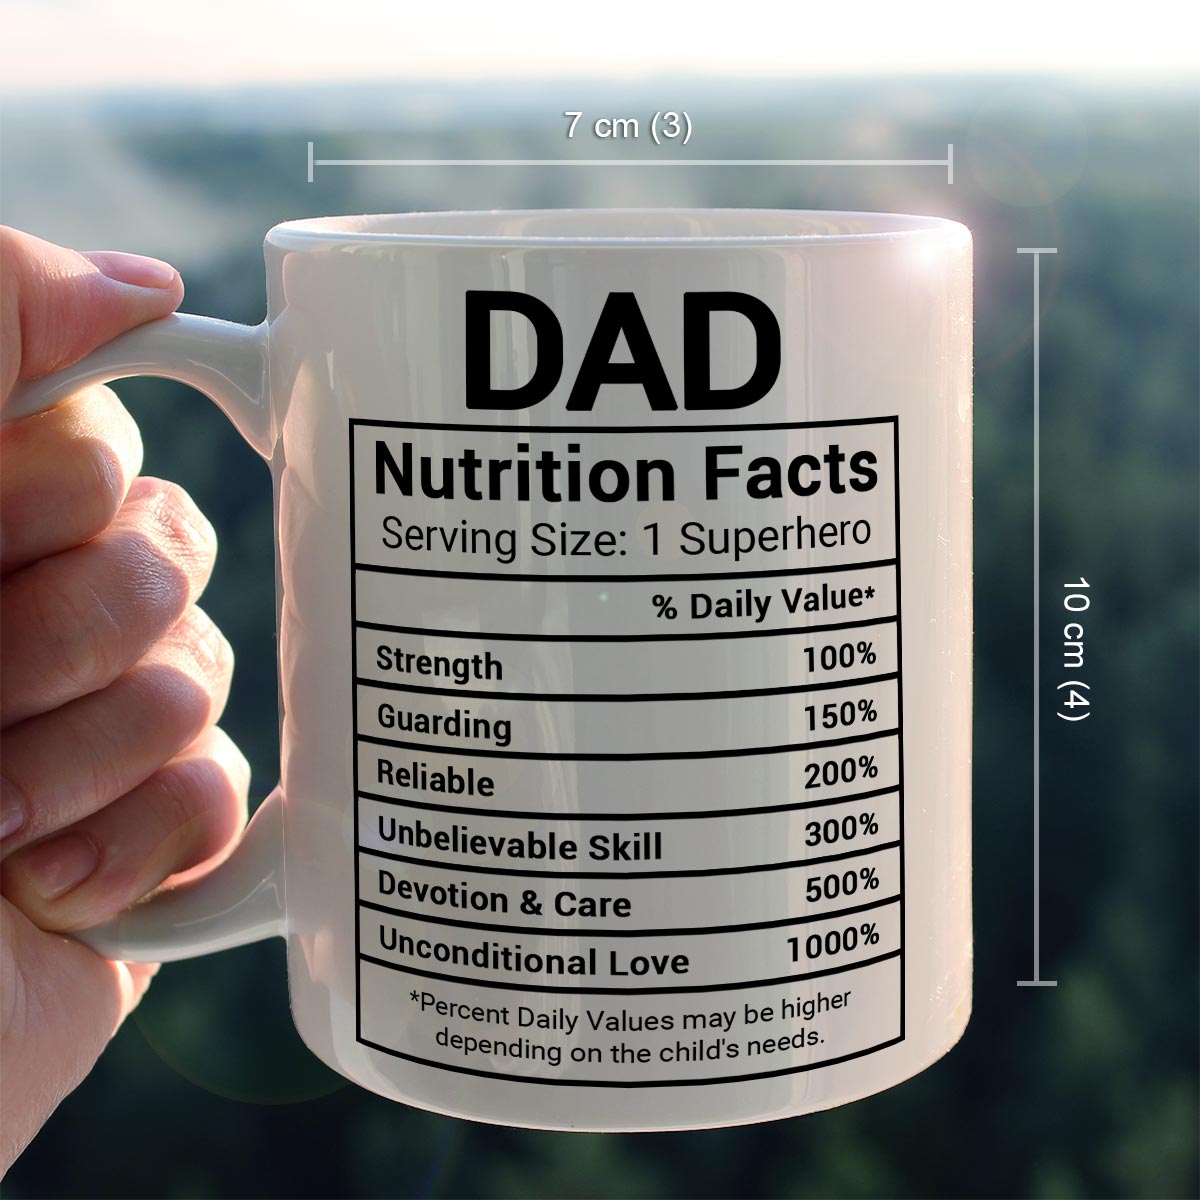 Superhero Dad Nutrition Facts Coffee Mug